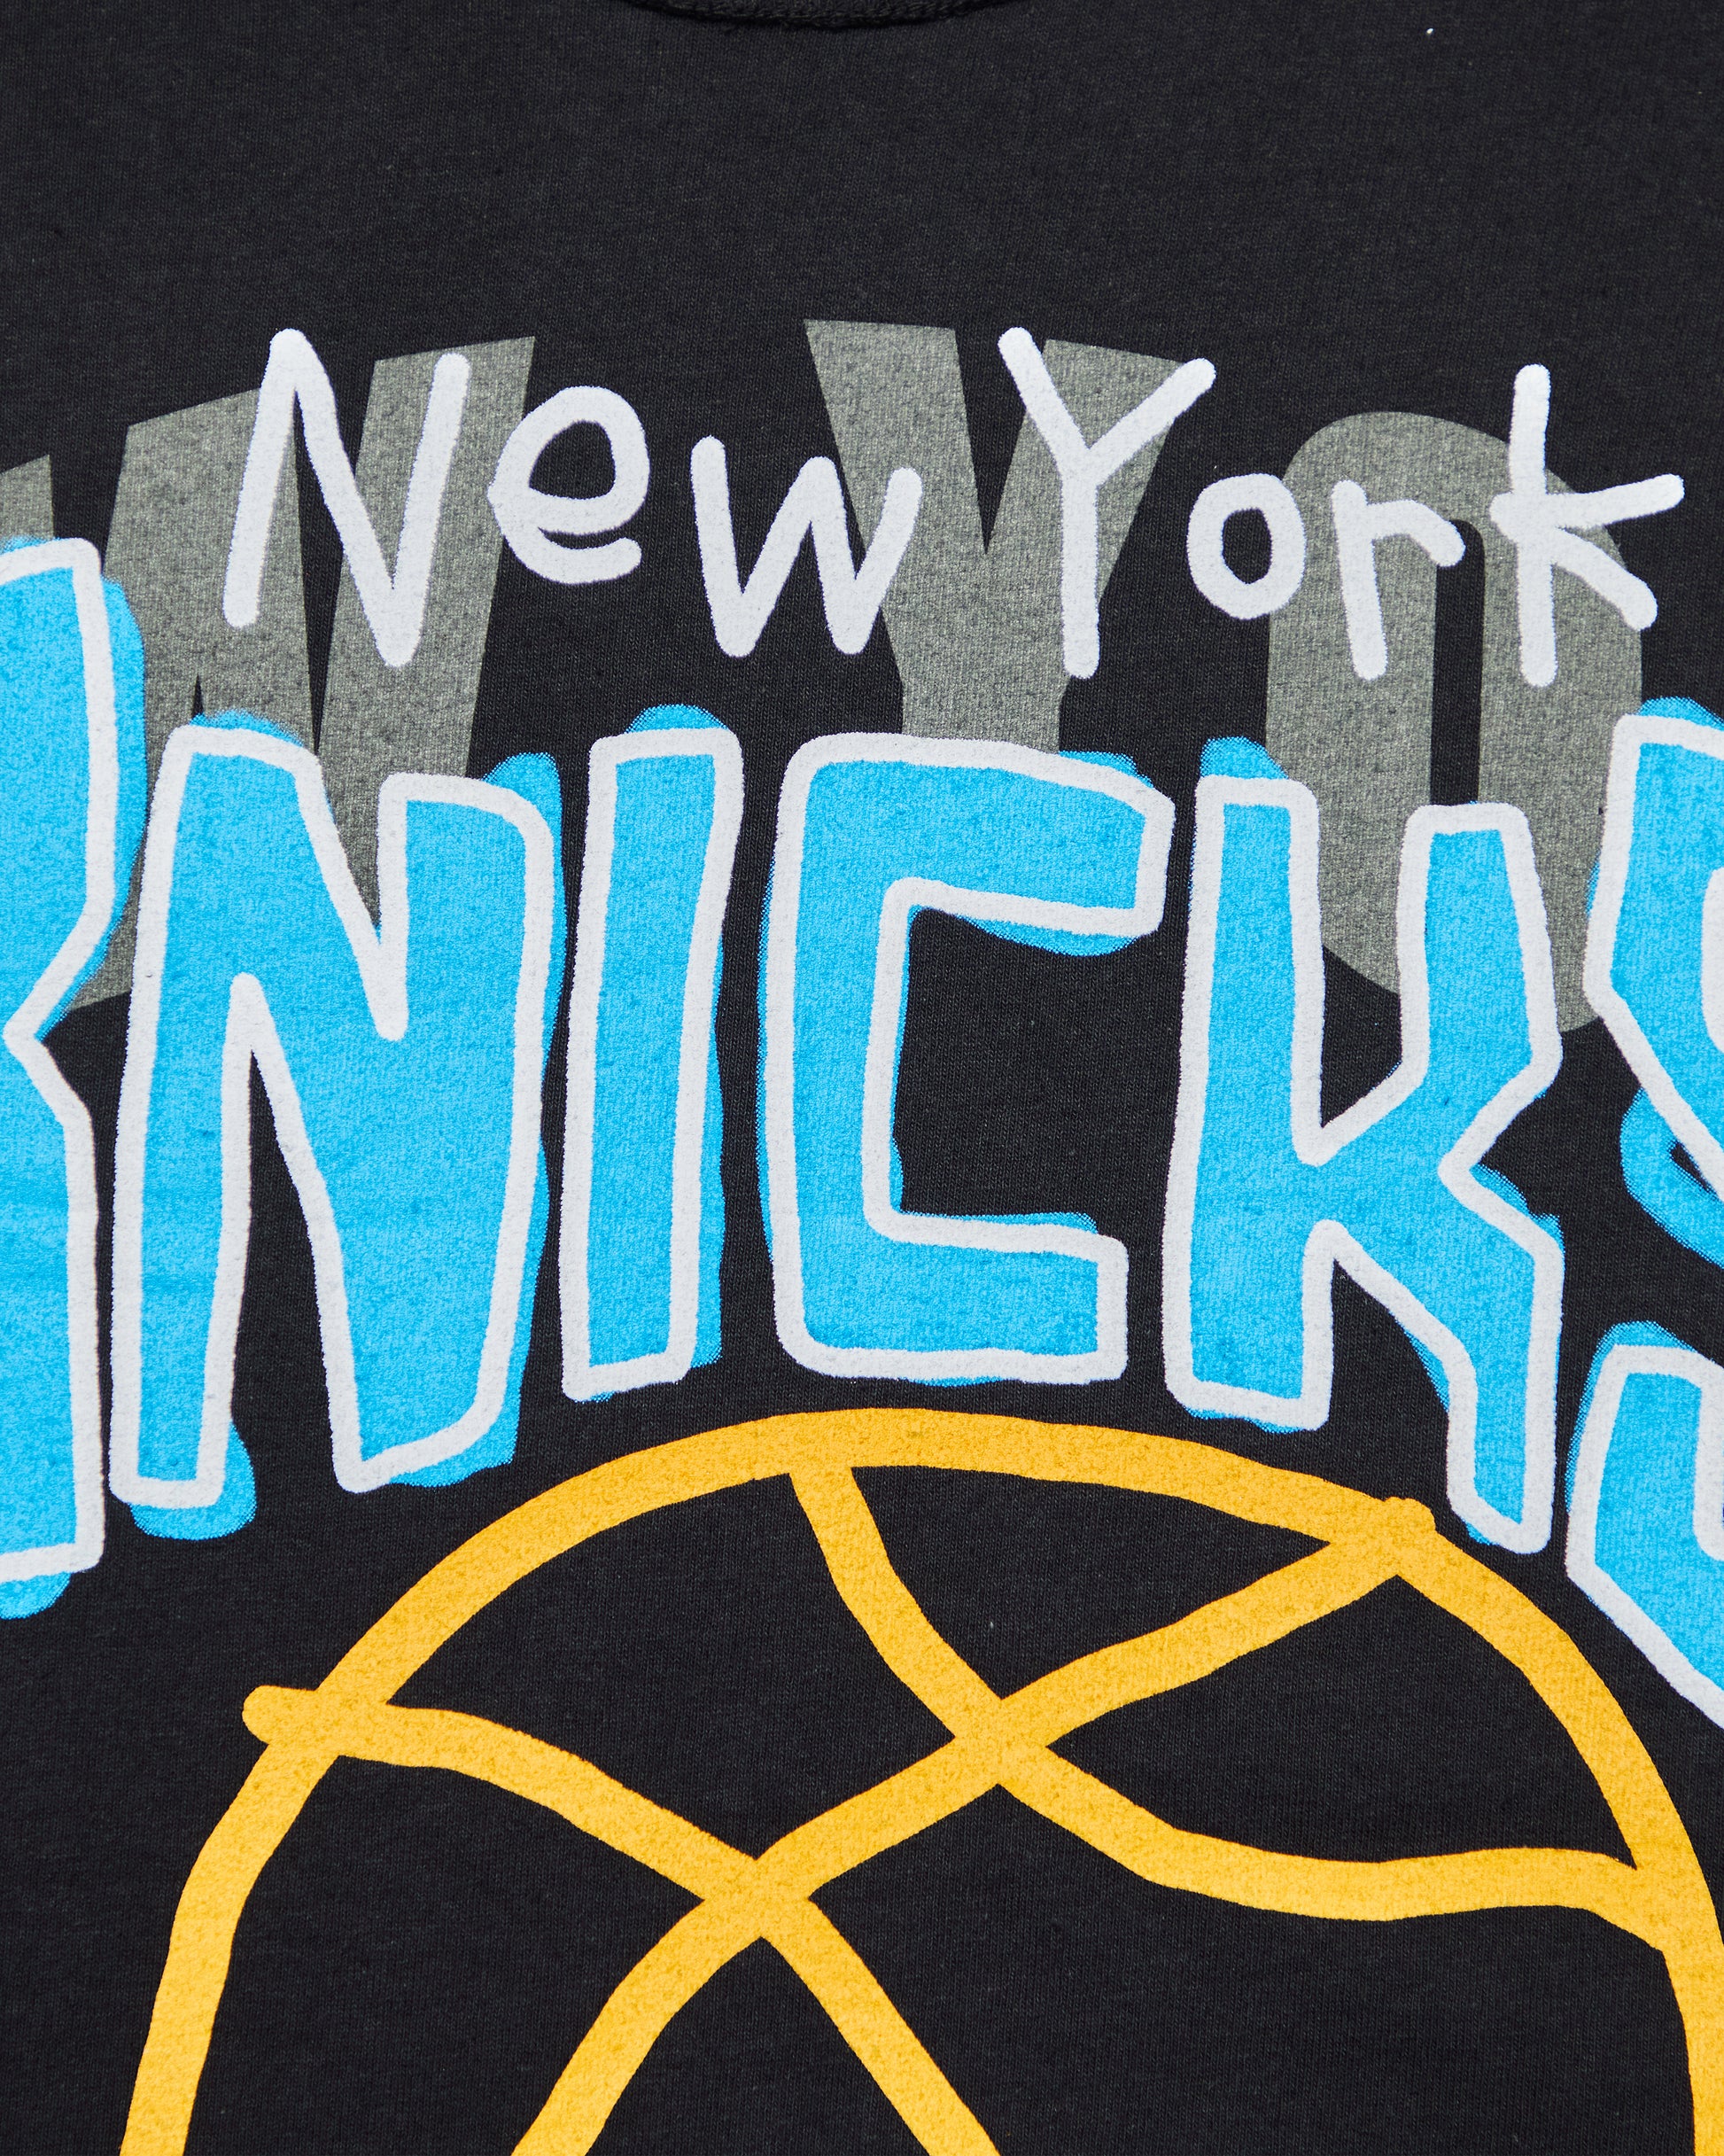 NBA New York Knicks Summer Hawaiian Shirt - Binteez